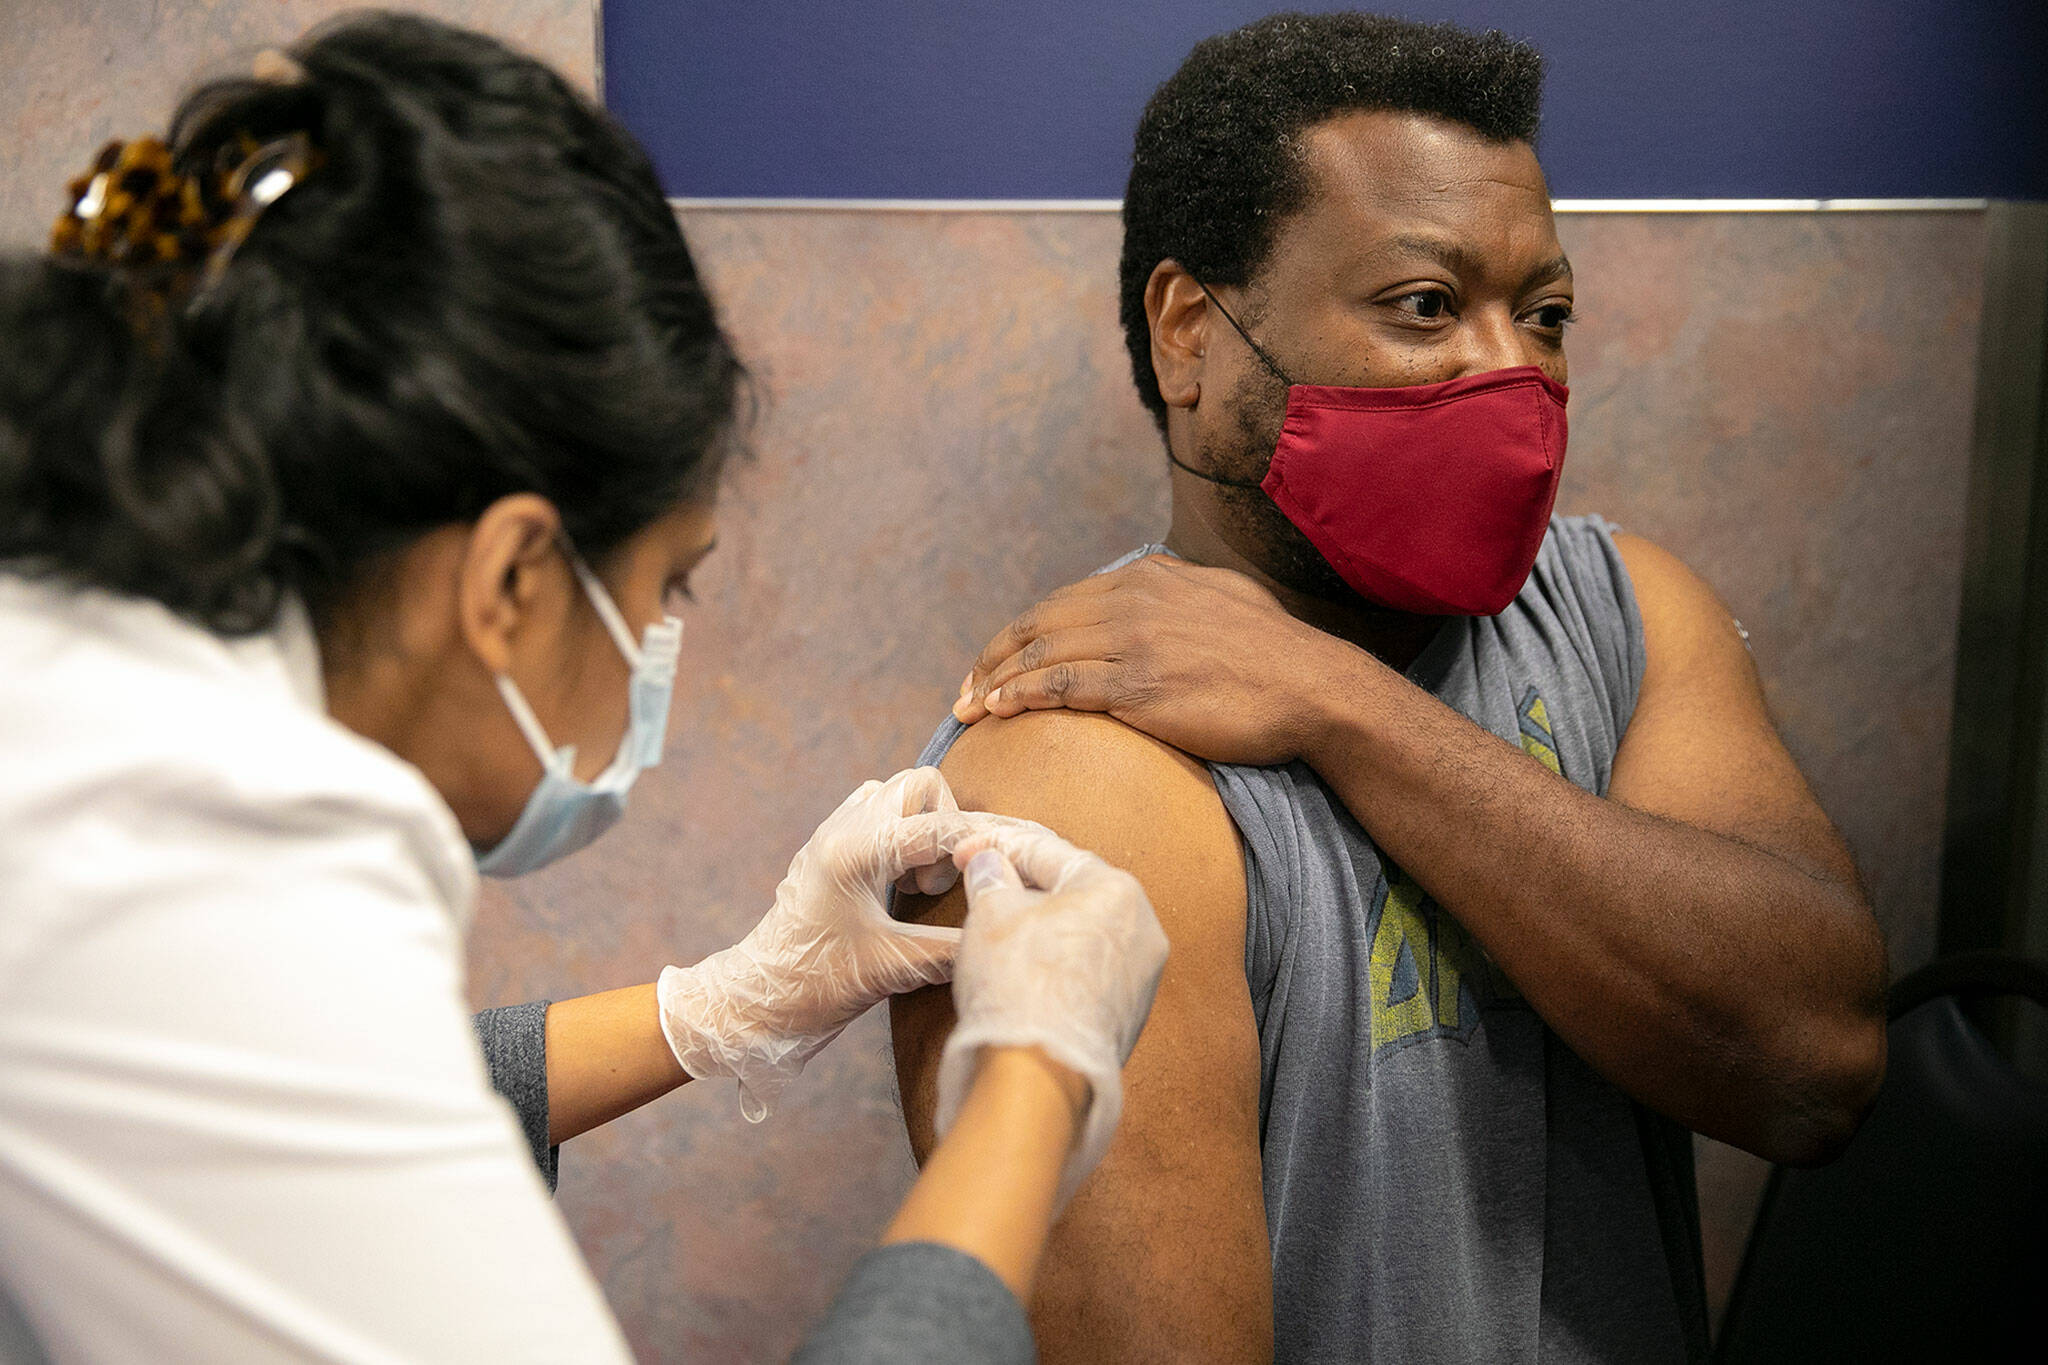 Everett resident Shon Grimes receives a flu shot from pharmacist Nisha Mathew at Bartell Drugs on Broadway on Saturday, Oct. 1, 2022, in Everett, Washington. (Ryan Berry / The Herald)